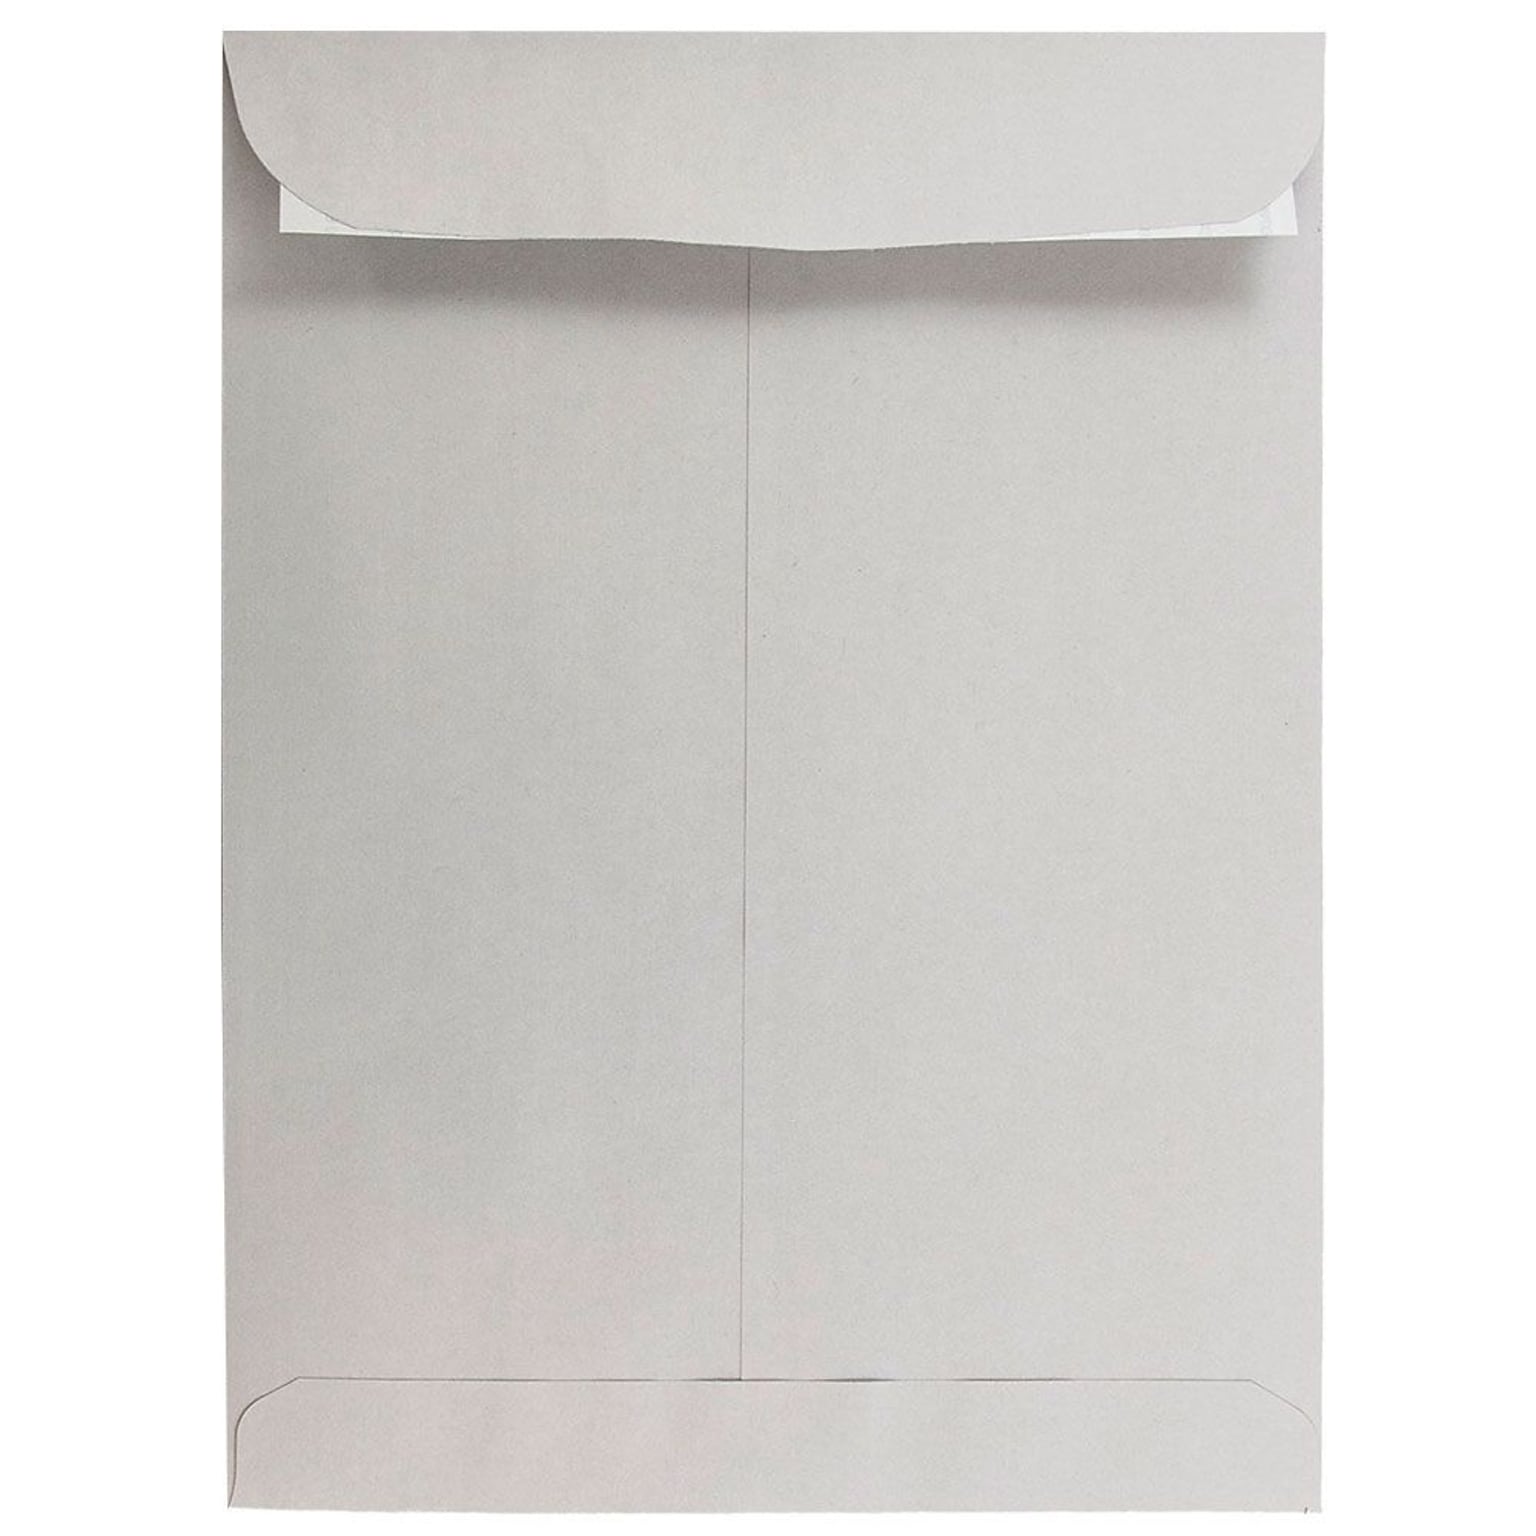 JAM Paper 9 x 12 Open End Catalog Envelopes with Peel and Seal Closure, Light Grey, Bulk 1000/Carton (12931115B)